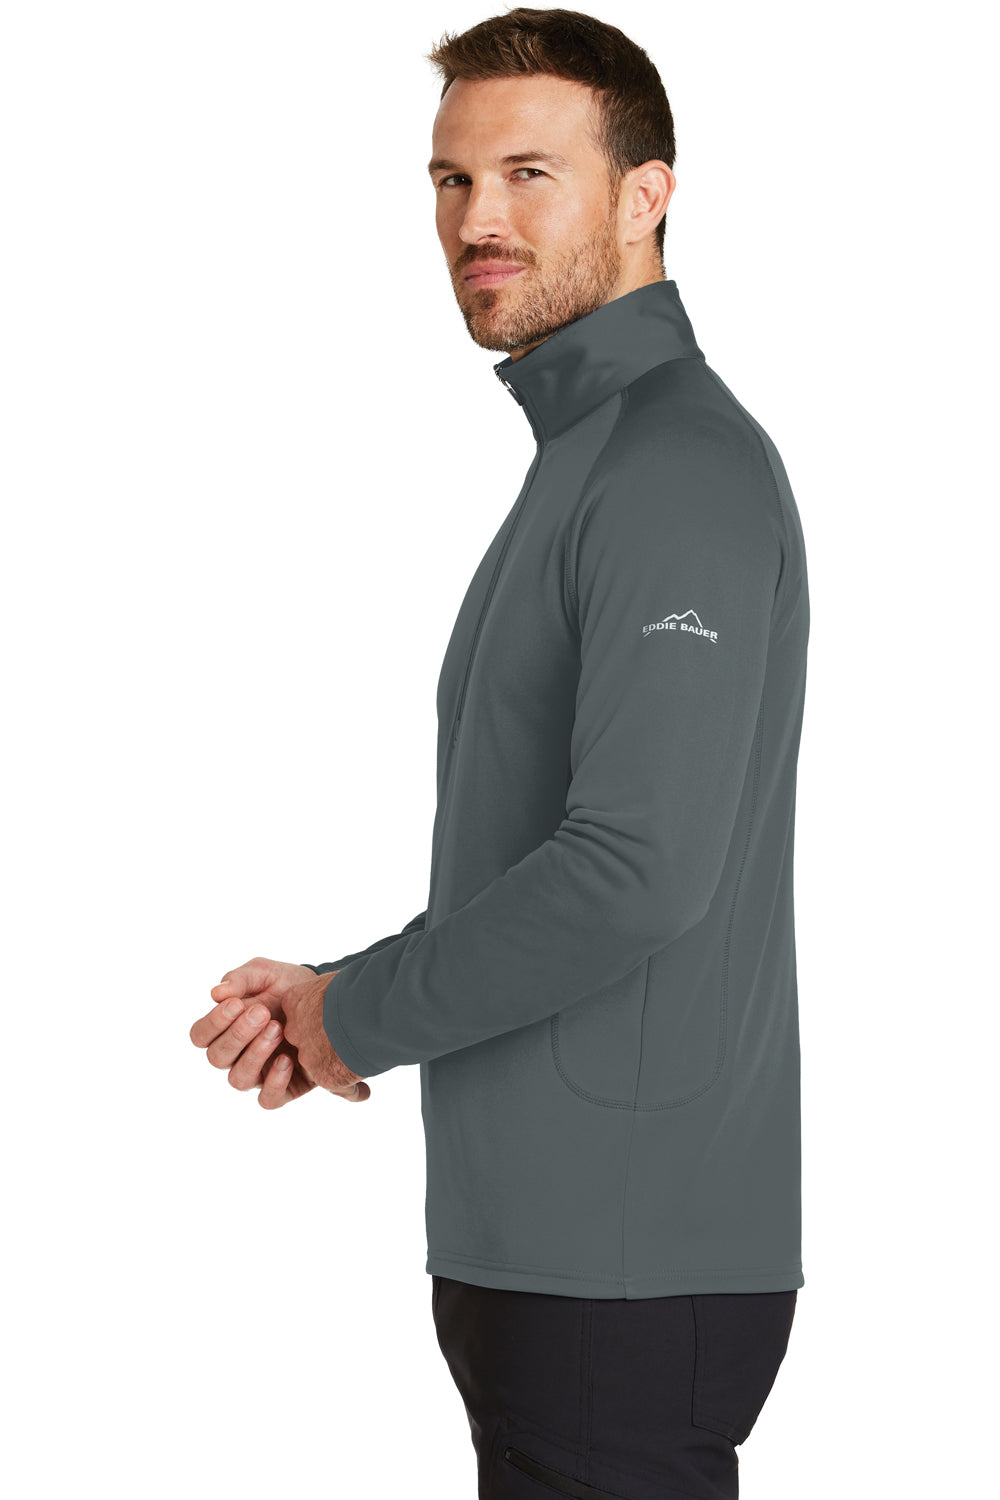 Eddie Bauer EB236 Mens Smooth Fleece 1/4 Zip Sweatshirt Iron Grey Model Side